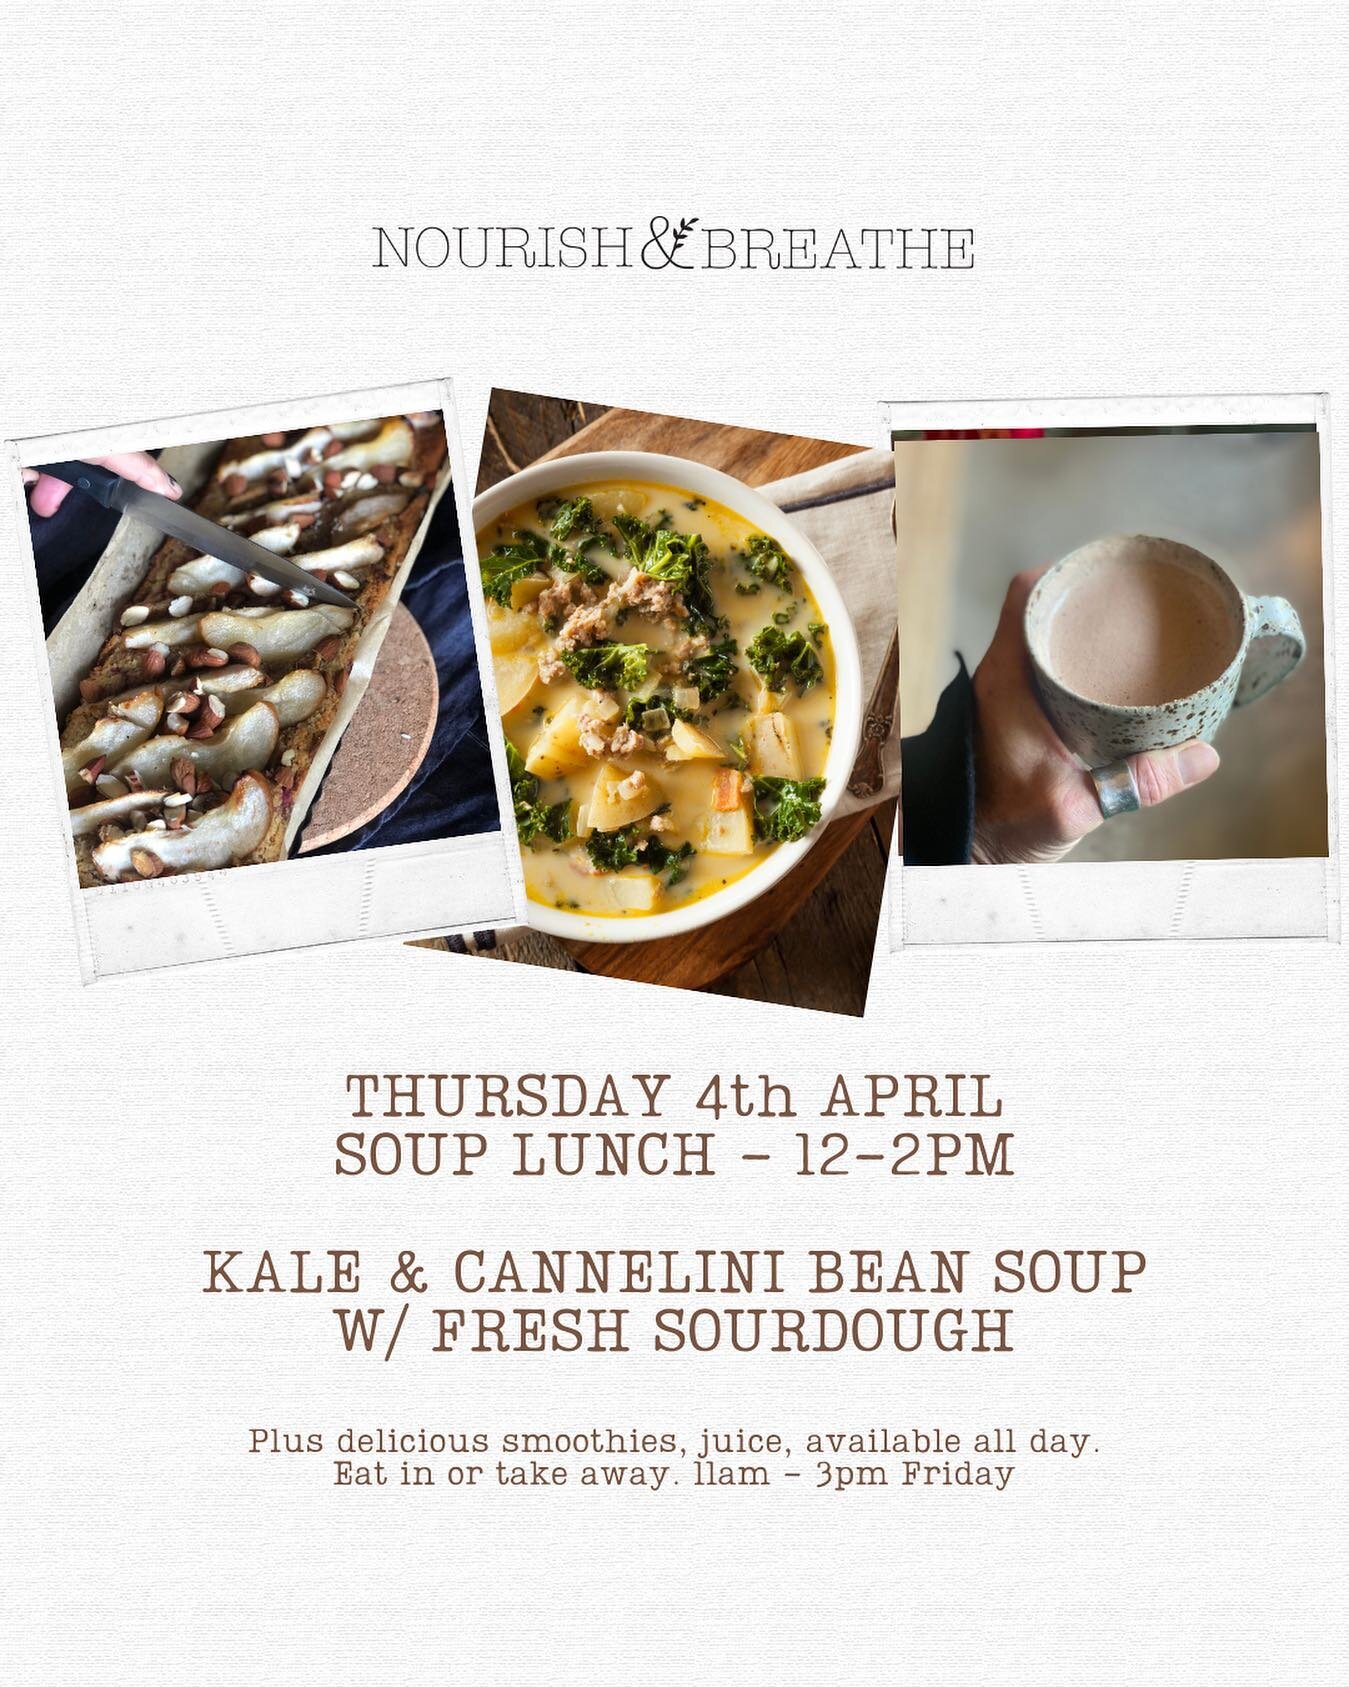 N&amp;B KITCHEN

Thursday 4th April |12-2pm
Soup Lunch 

Kale &amp; Cannelini Bean Soup
w/ fresh sourdough 

(Until it&rsquo;s all gone 😀)

@dairy_road 

#nourishandbreathe #wholefood #nourish #canberrafood